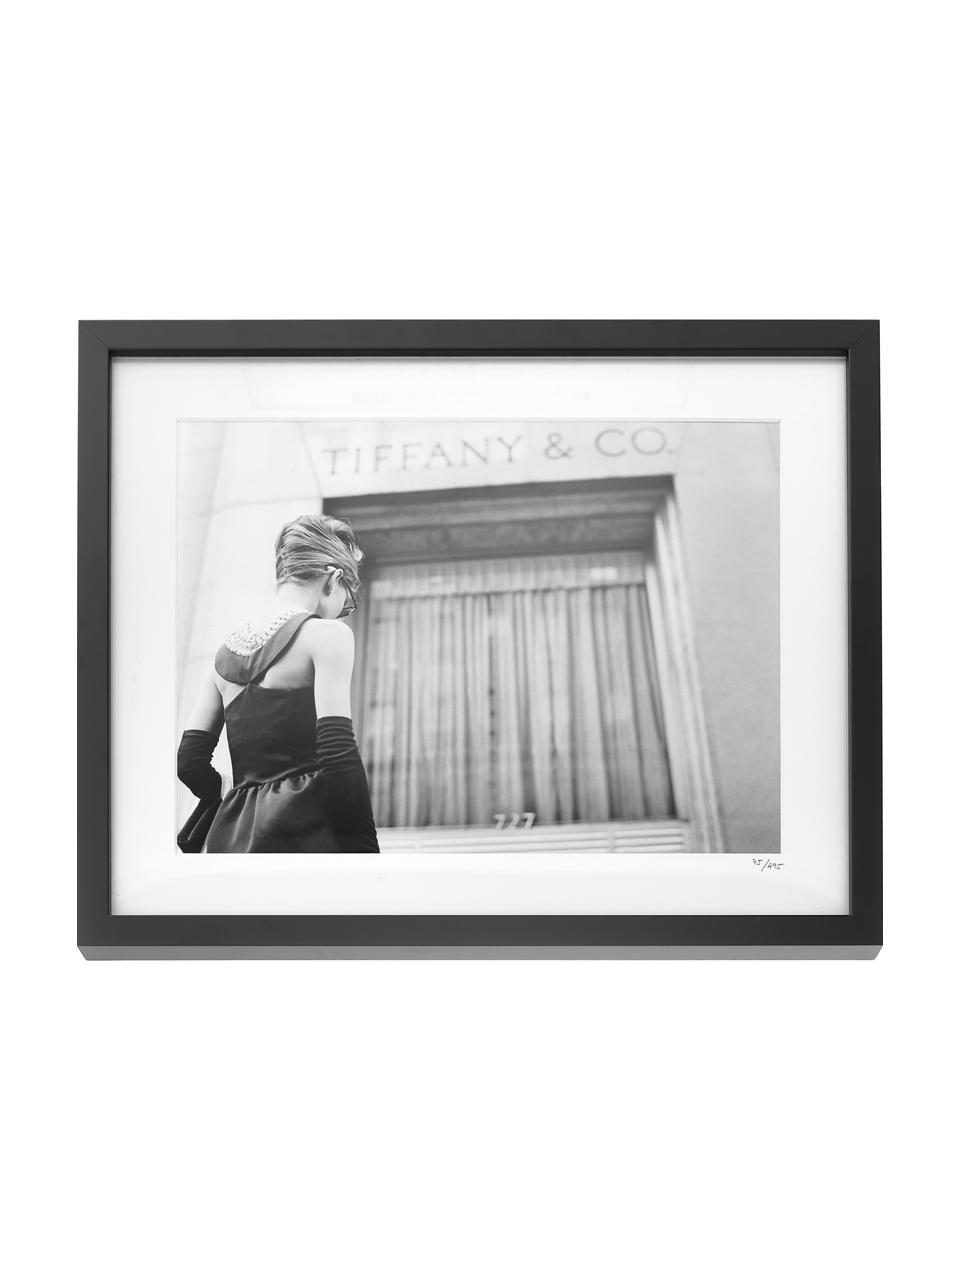 Gerahmter Fotodruck Hepburn Breakfast at Tiffany's, Bild: Fuji Crystal Archive Papi, Rahmen: Holz, lackiert, Front: Plexiglas, Bild: Schwarz, Weiß
Rahmen: Schwarz, 50 x 40 cm